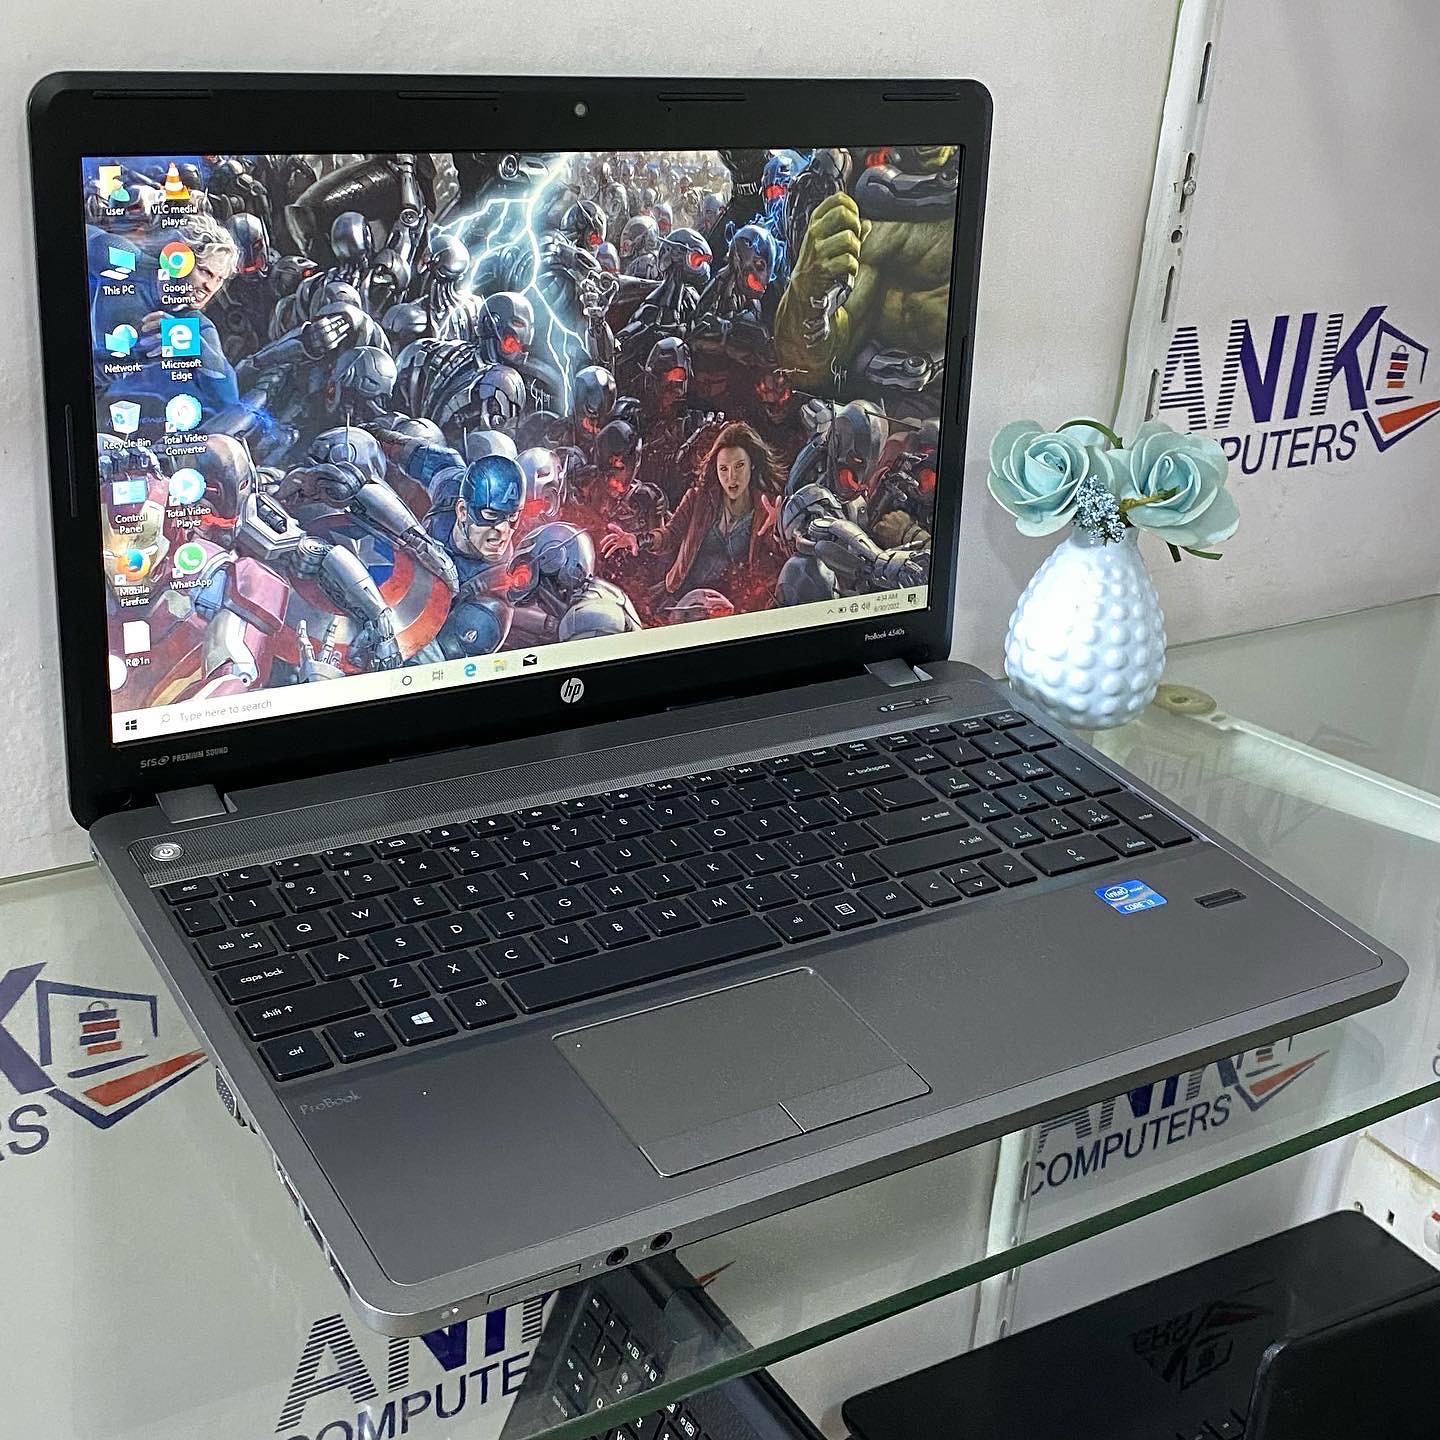 HP ProBook 4540s Notebook- 500GB HDD, 4GB RAM, i3-3110M CPU, Windows 10 Pro  - Used 